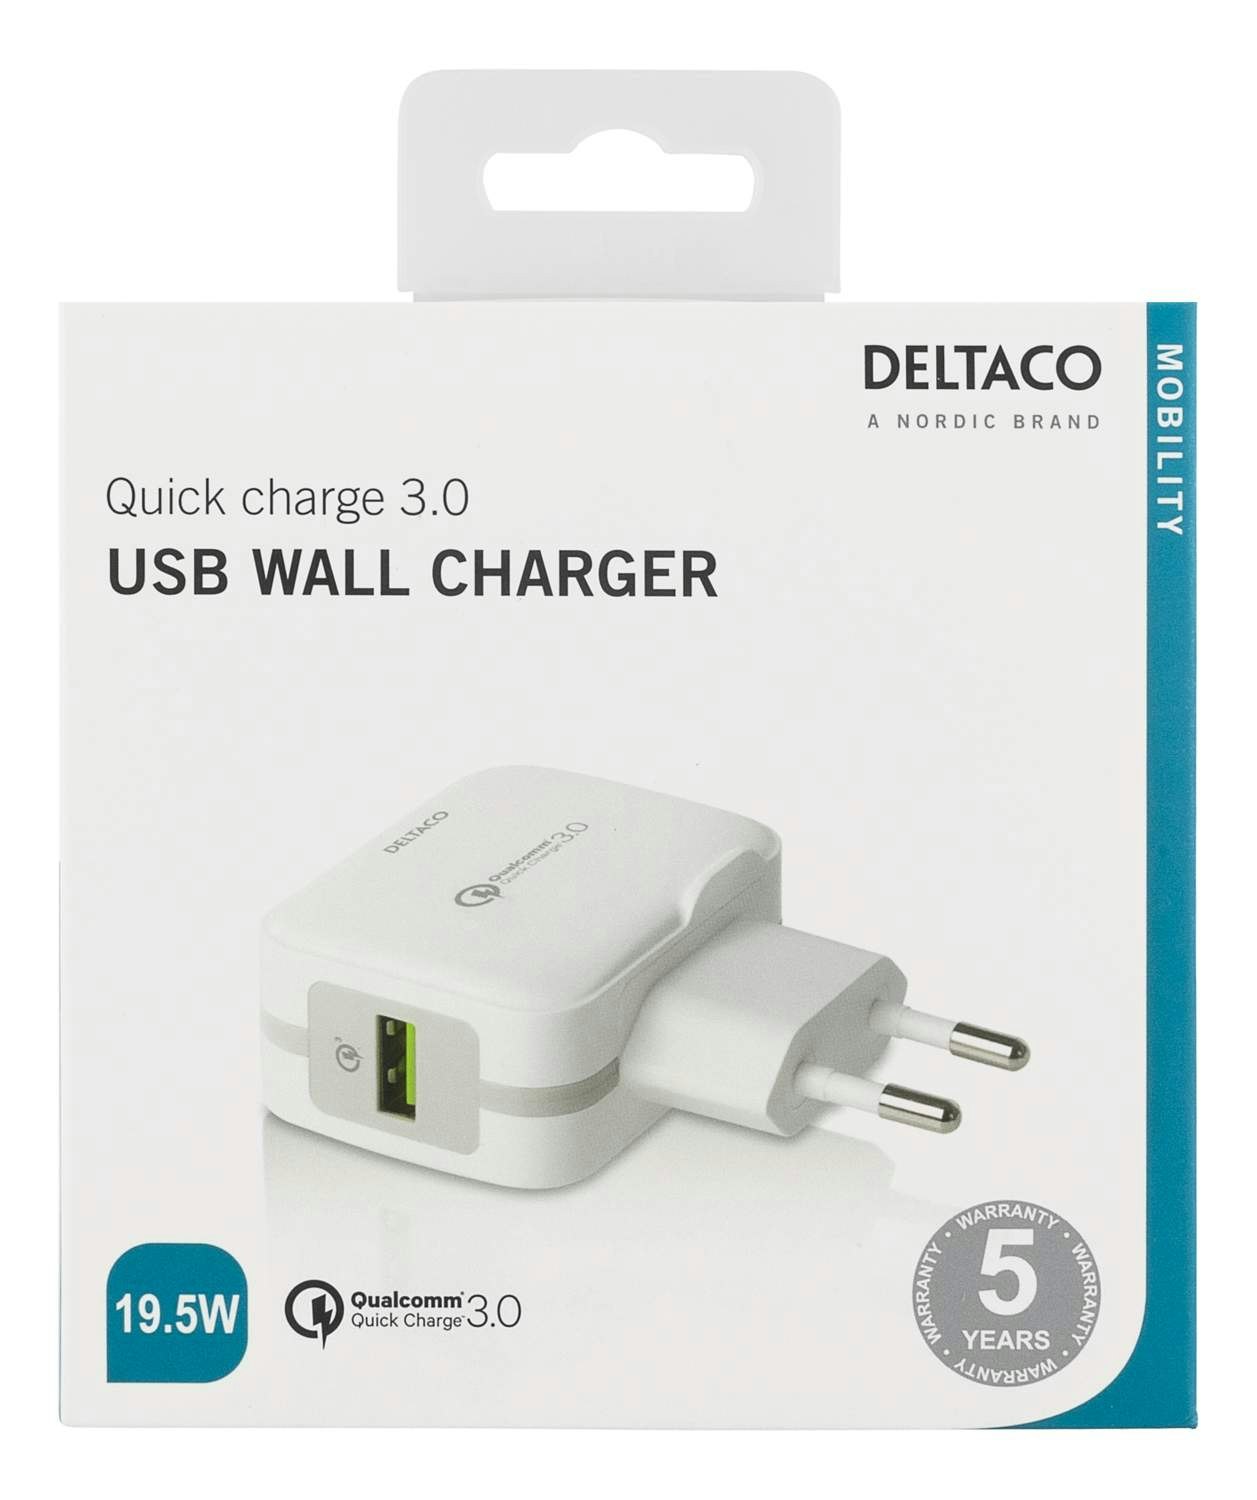 DELTACO Väggladdare USB, Qualcomm Quick Charge 3.0, 19,5W, vit